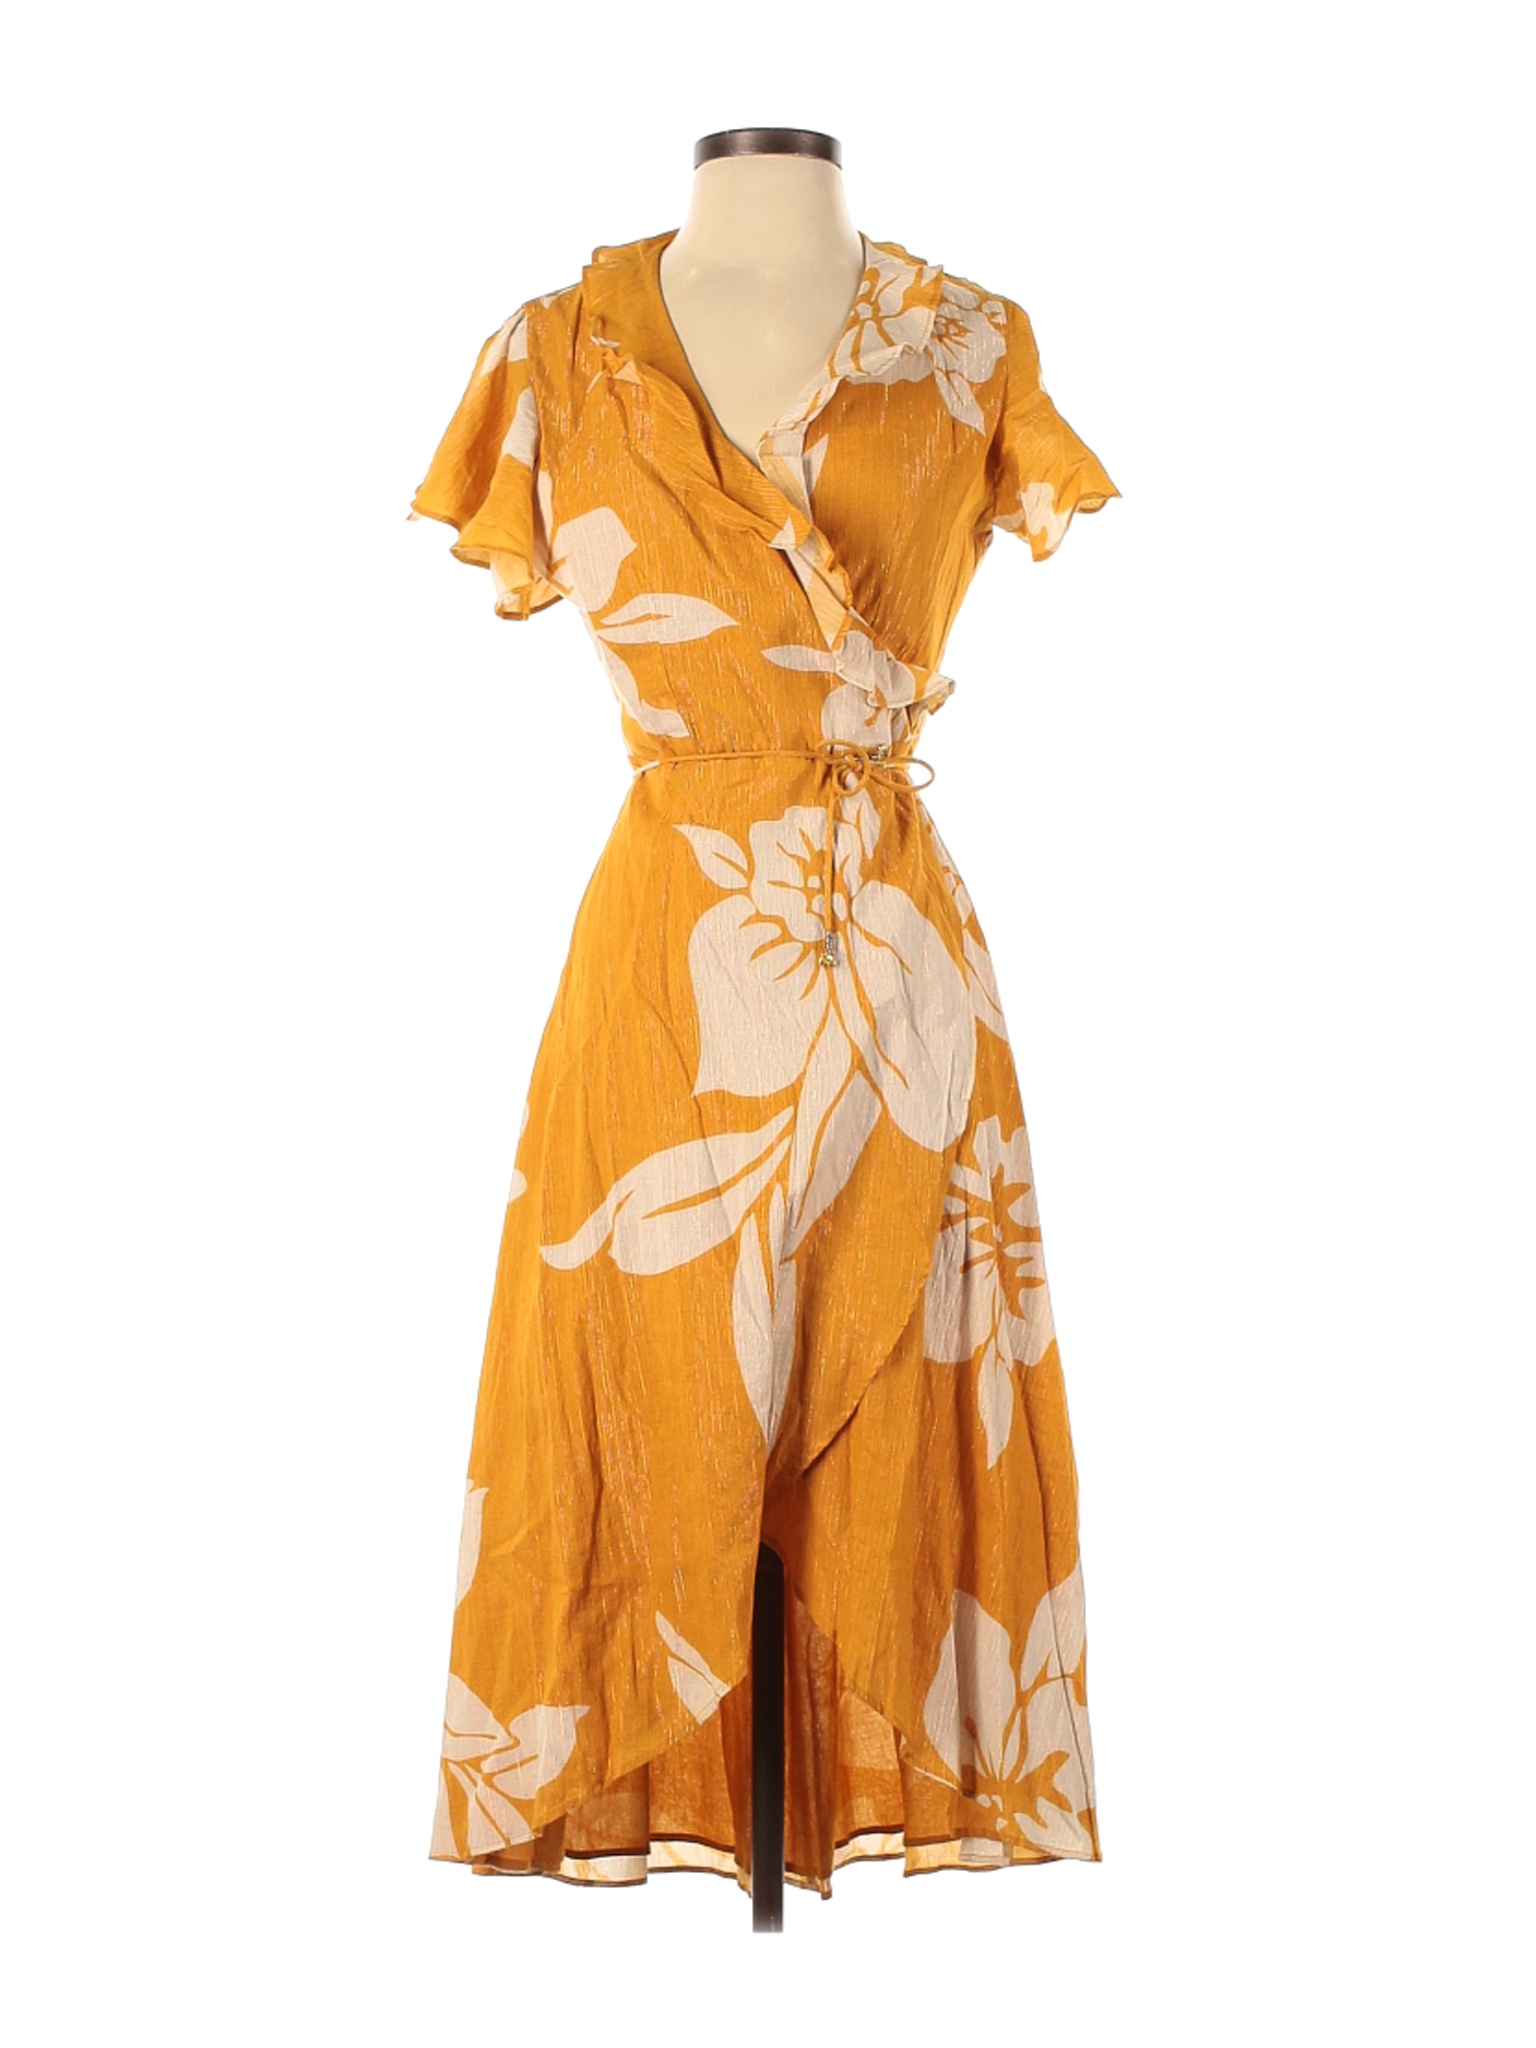 NWT Cleobella Women Yellow Casual Dress S | eBay